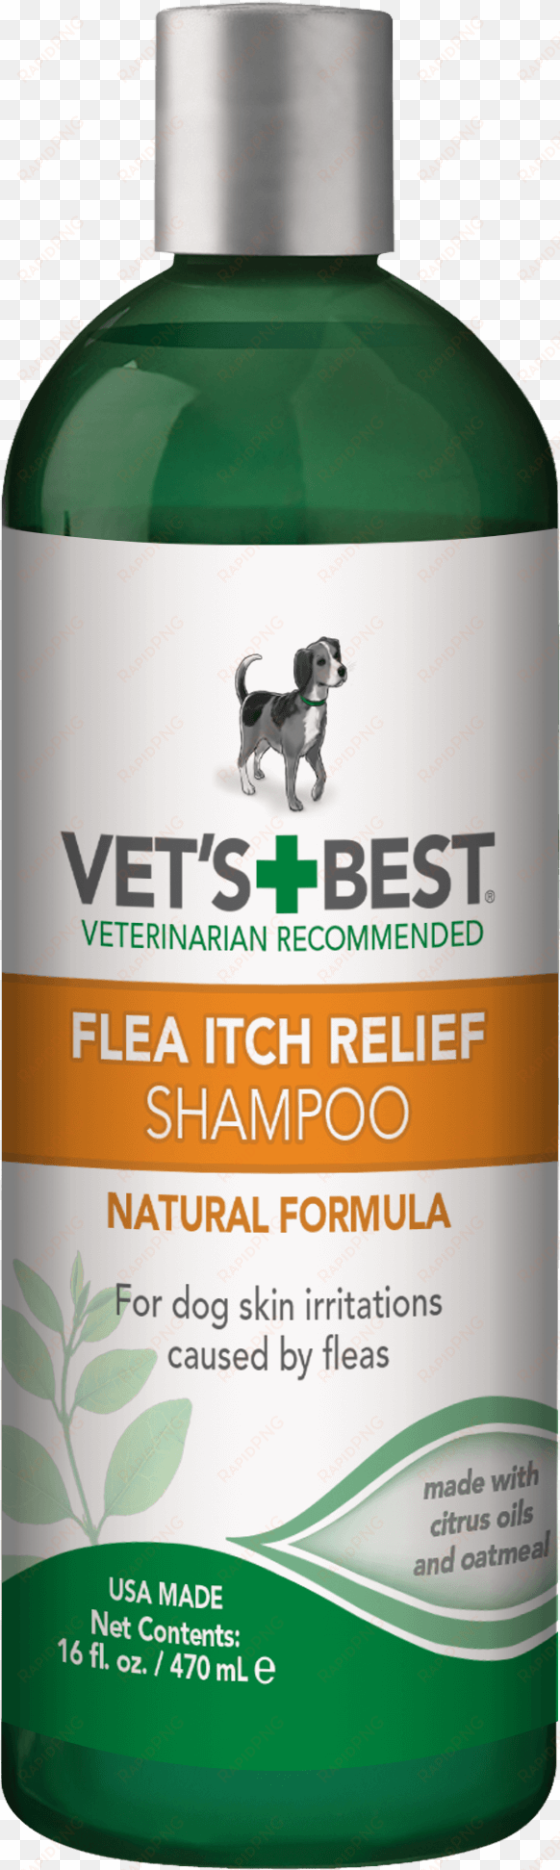 vet's best flea itch relief dog shampoo, 16 oz - vets best